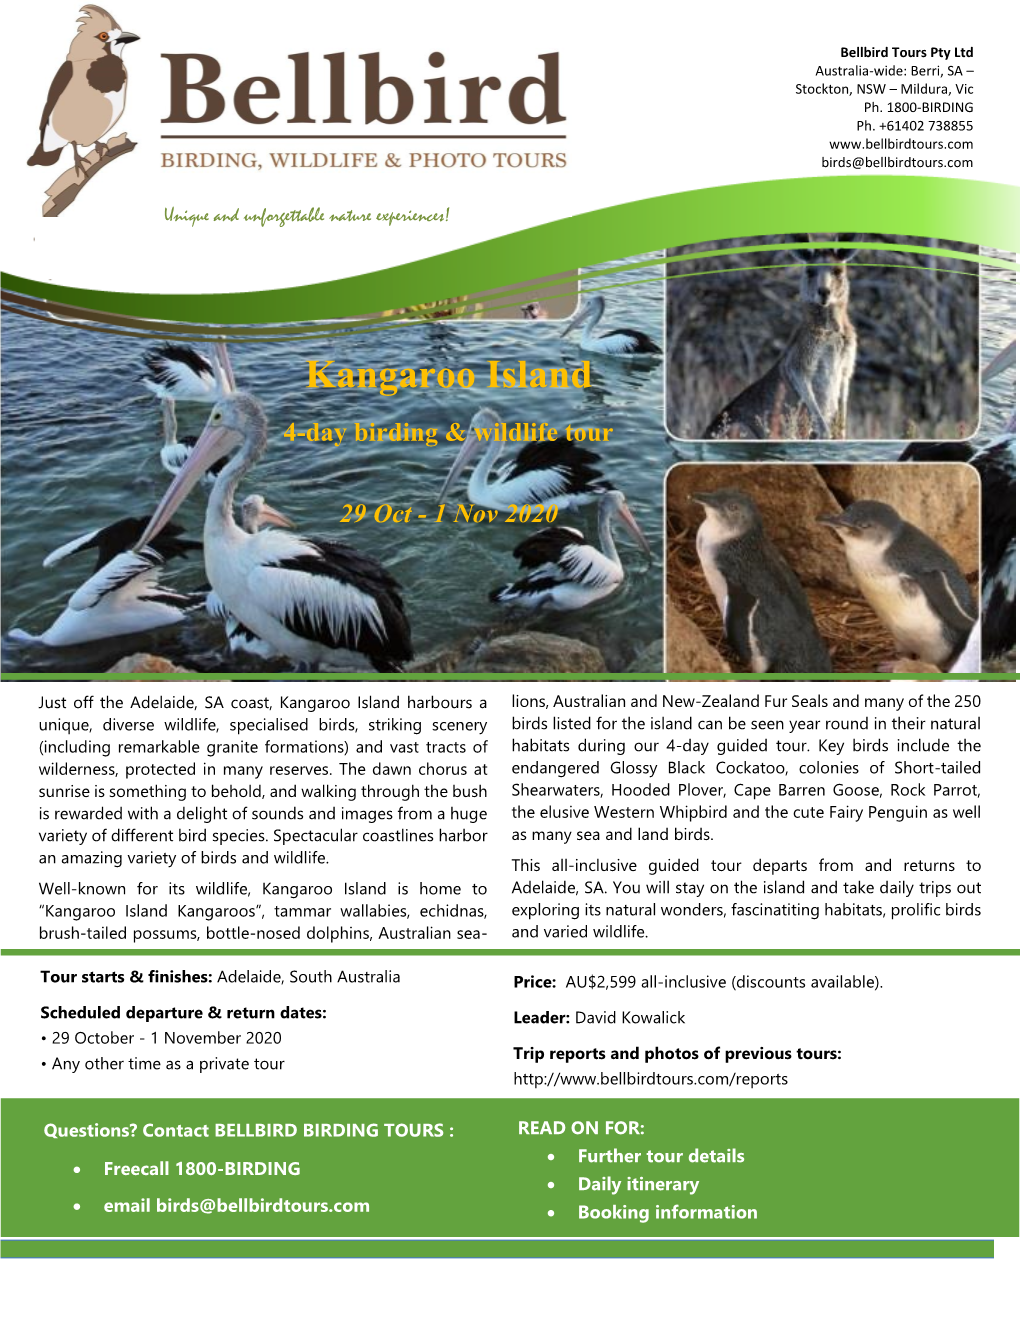 Kangaroo Island 4-Day Birding & Wildlife Tour